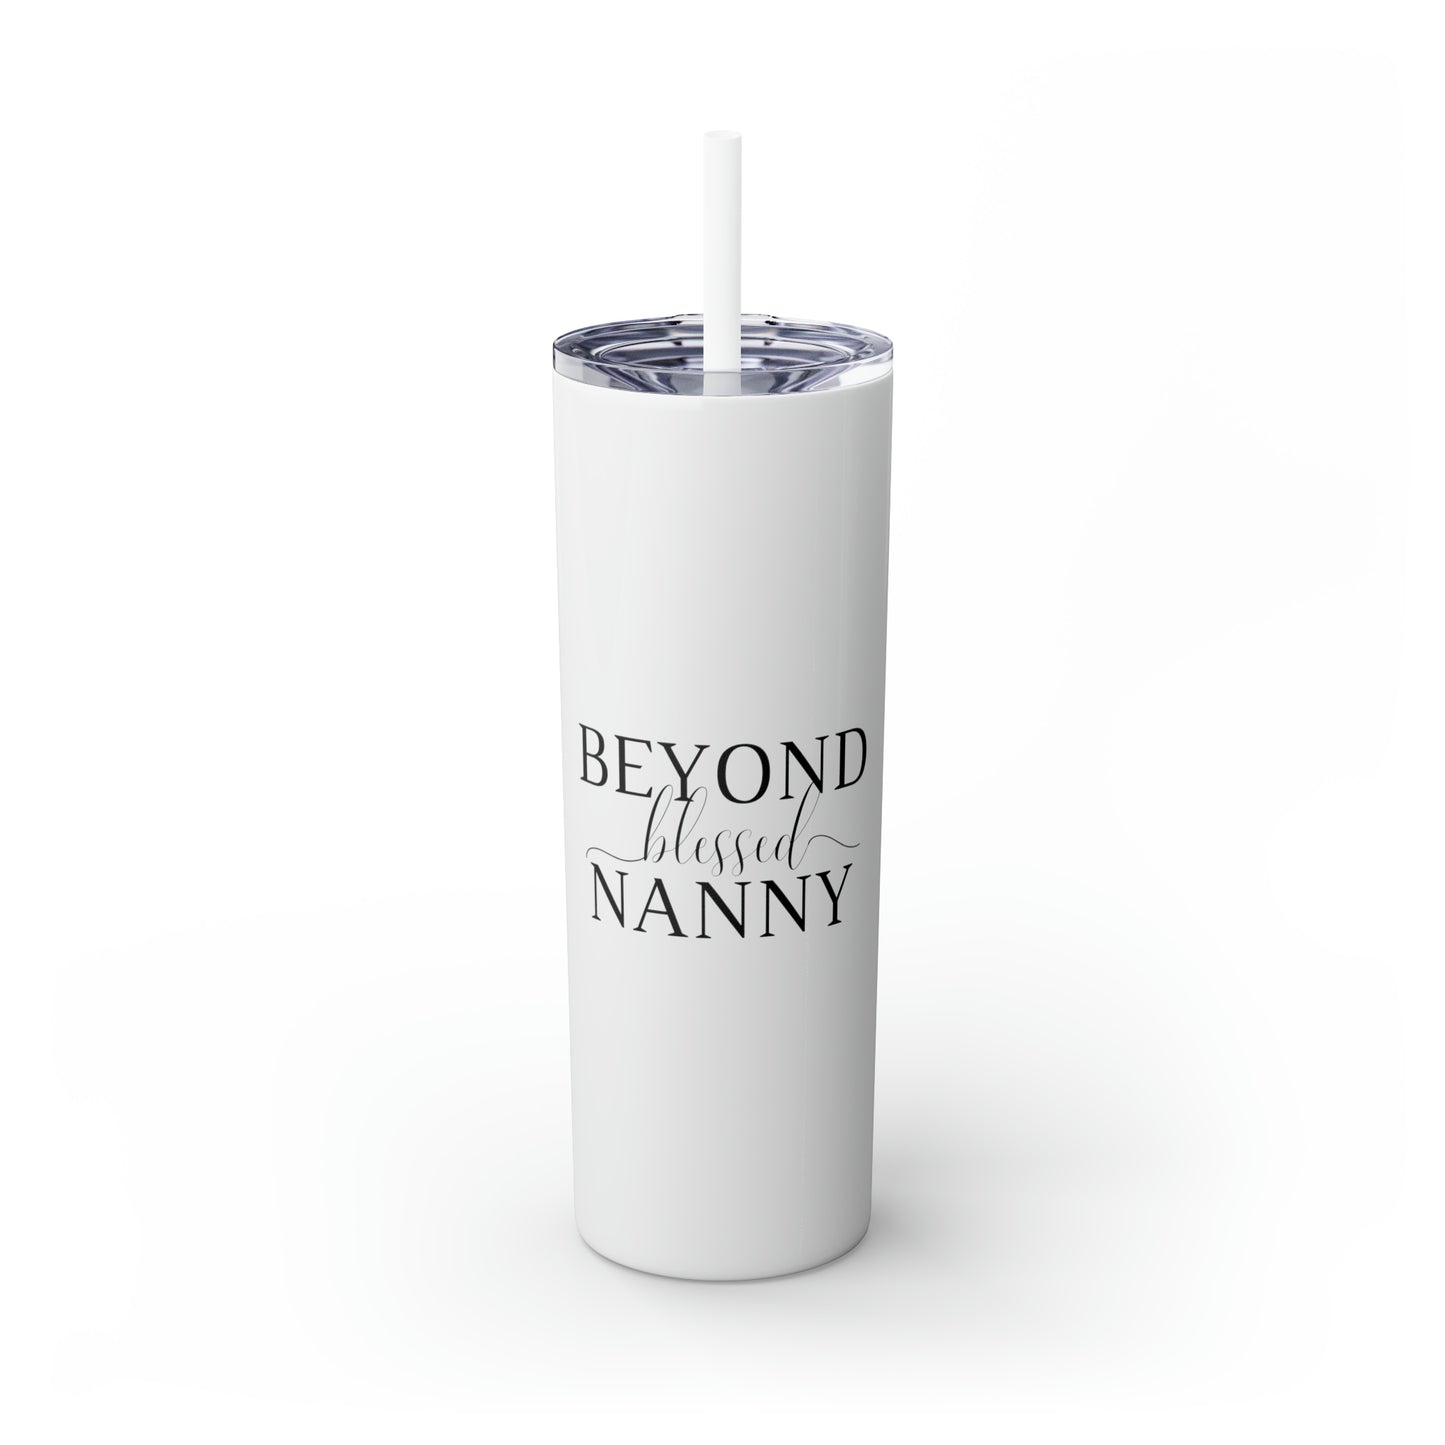 Beyond Blessed Nanny - Plain Skinny Tumbler with Straw, 20oz